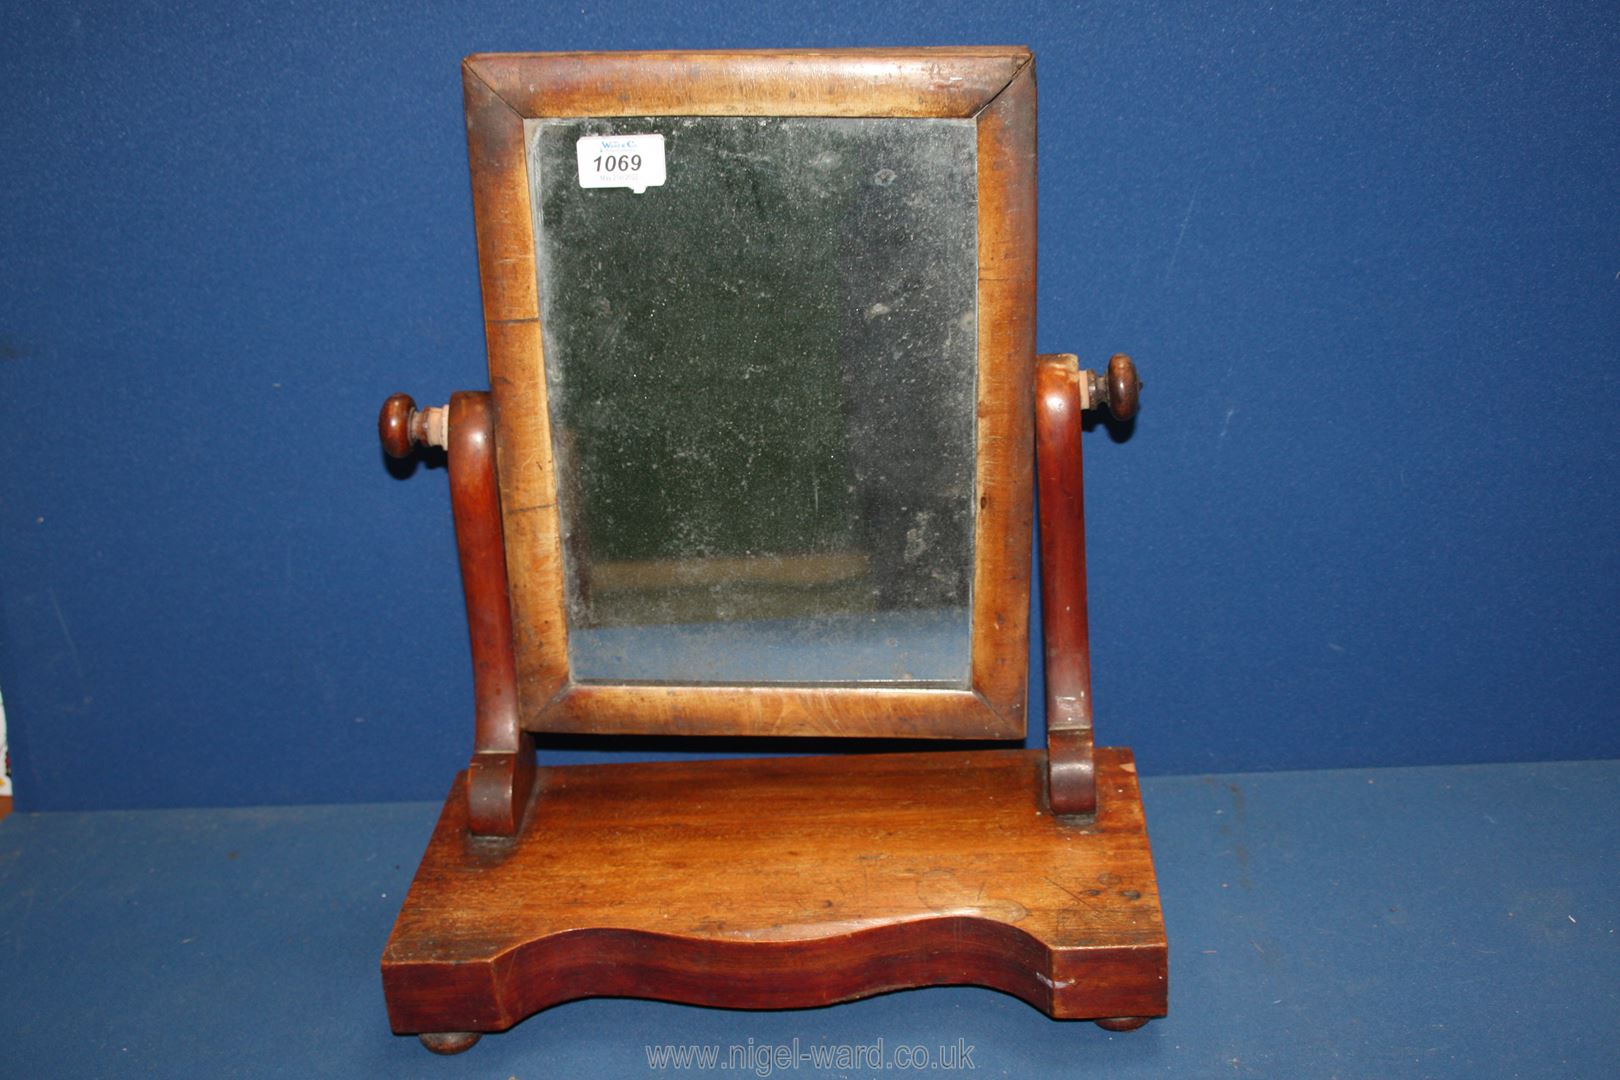 A darkwood Dressing table mirror a/f. 17" x 7".